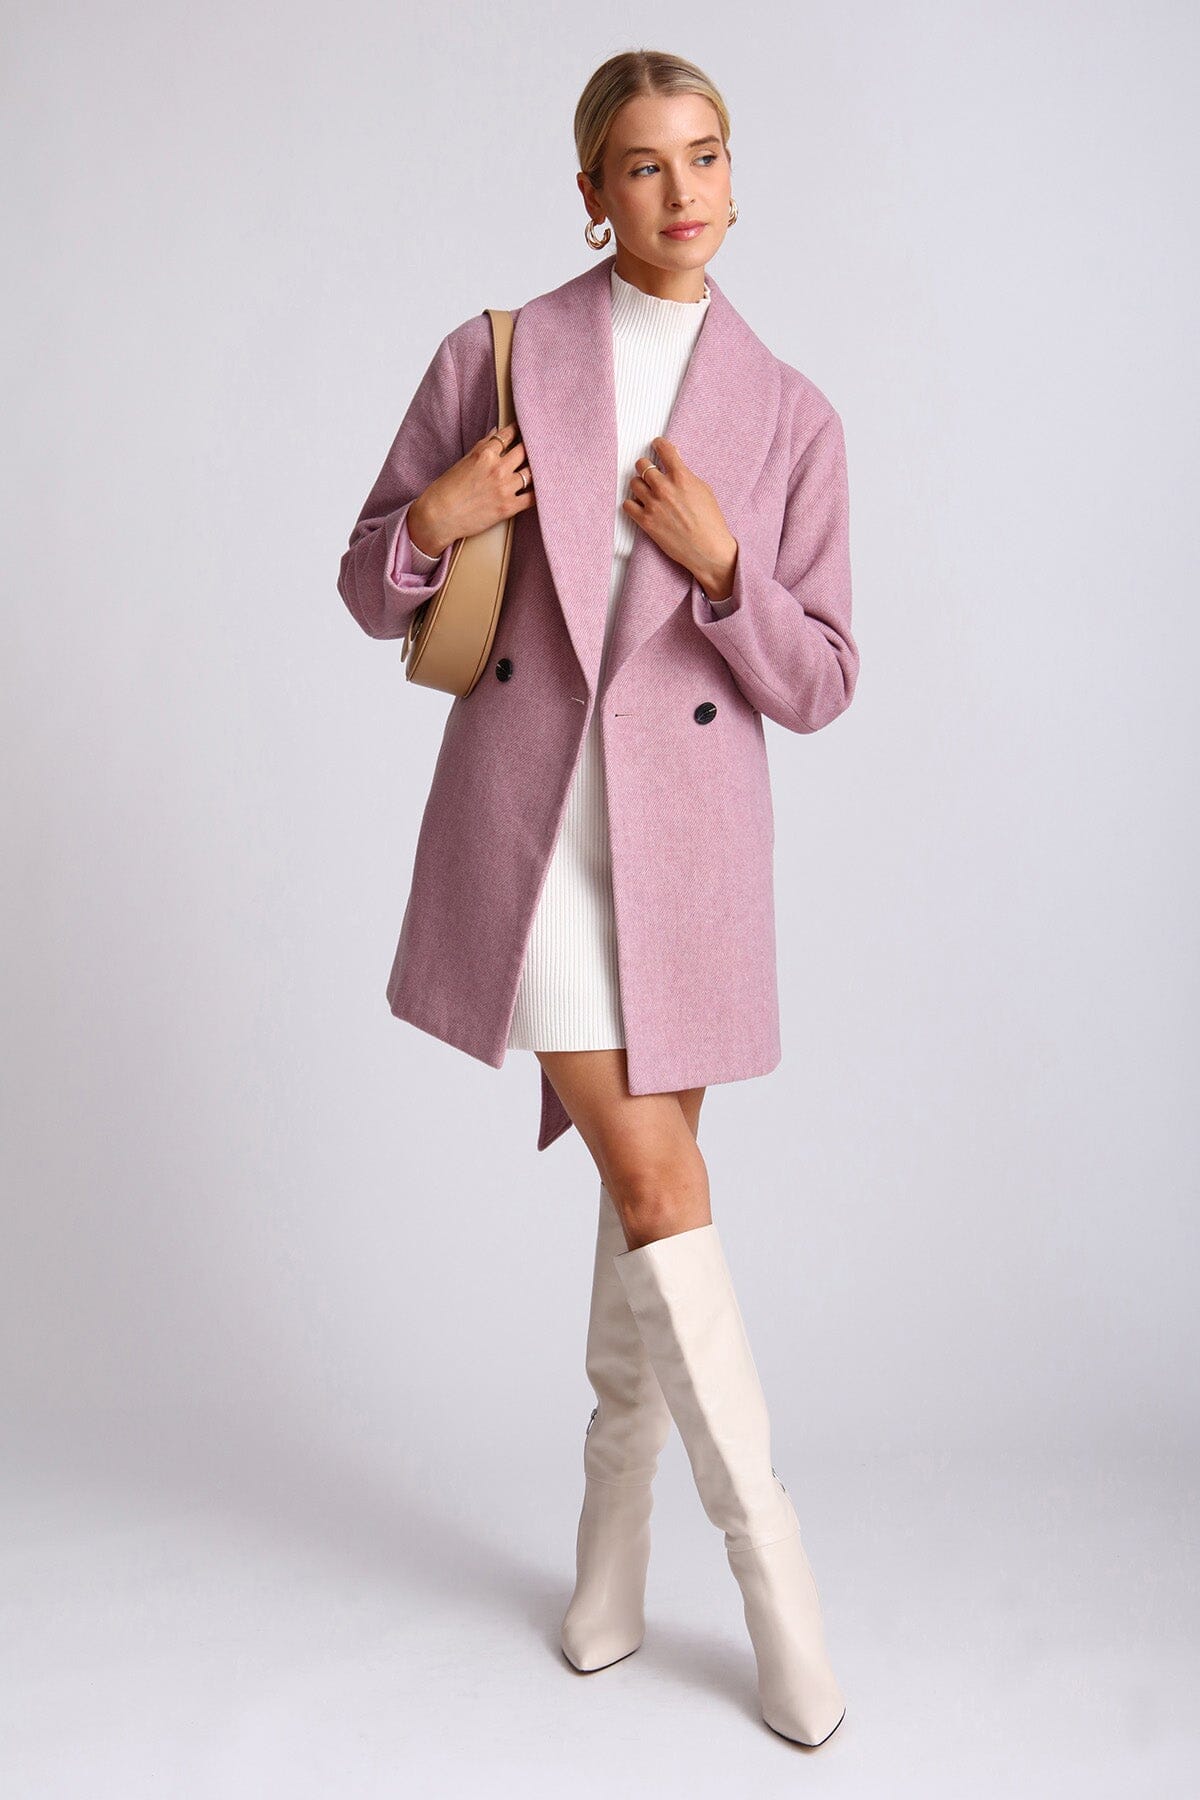 Light purple wool blend belted shawl collar peacoat coat - women's figure flattering cute date night peacoats coats